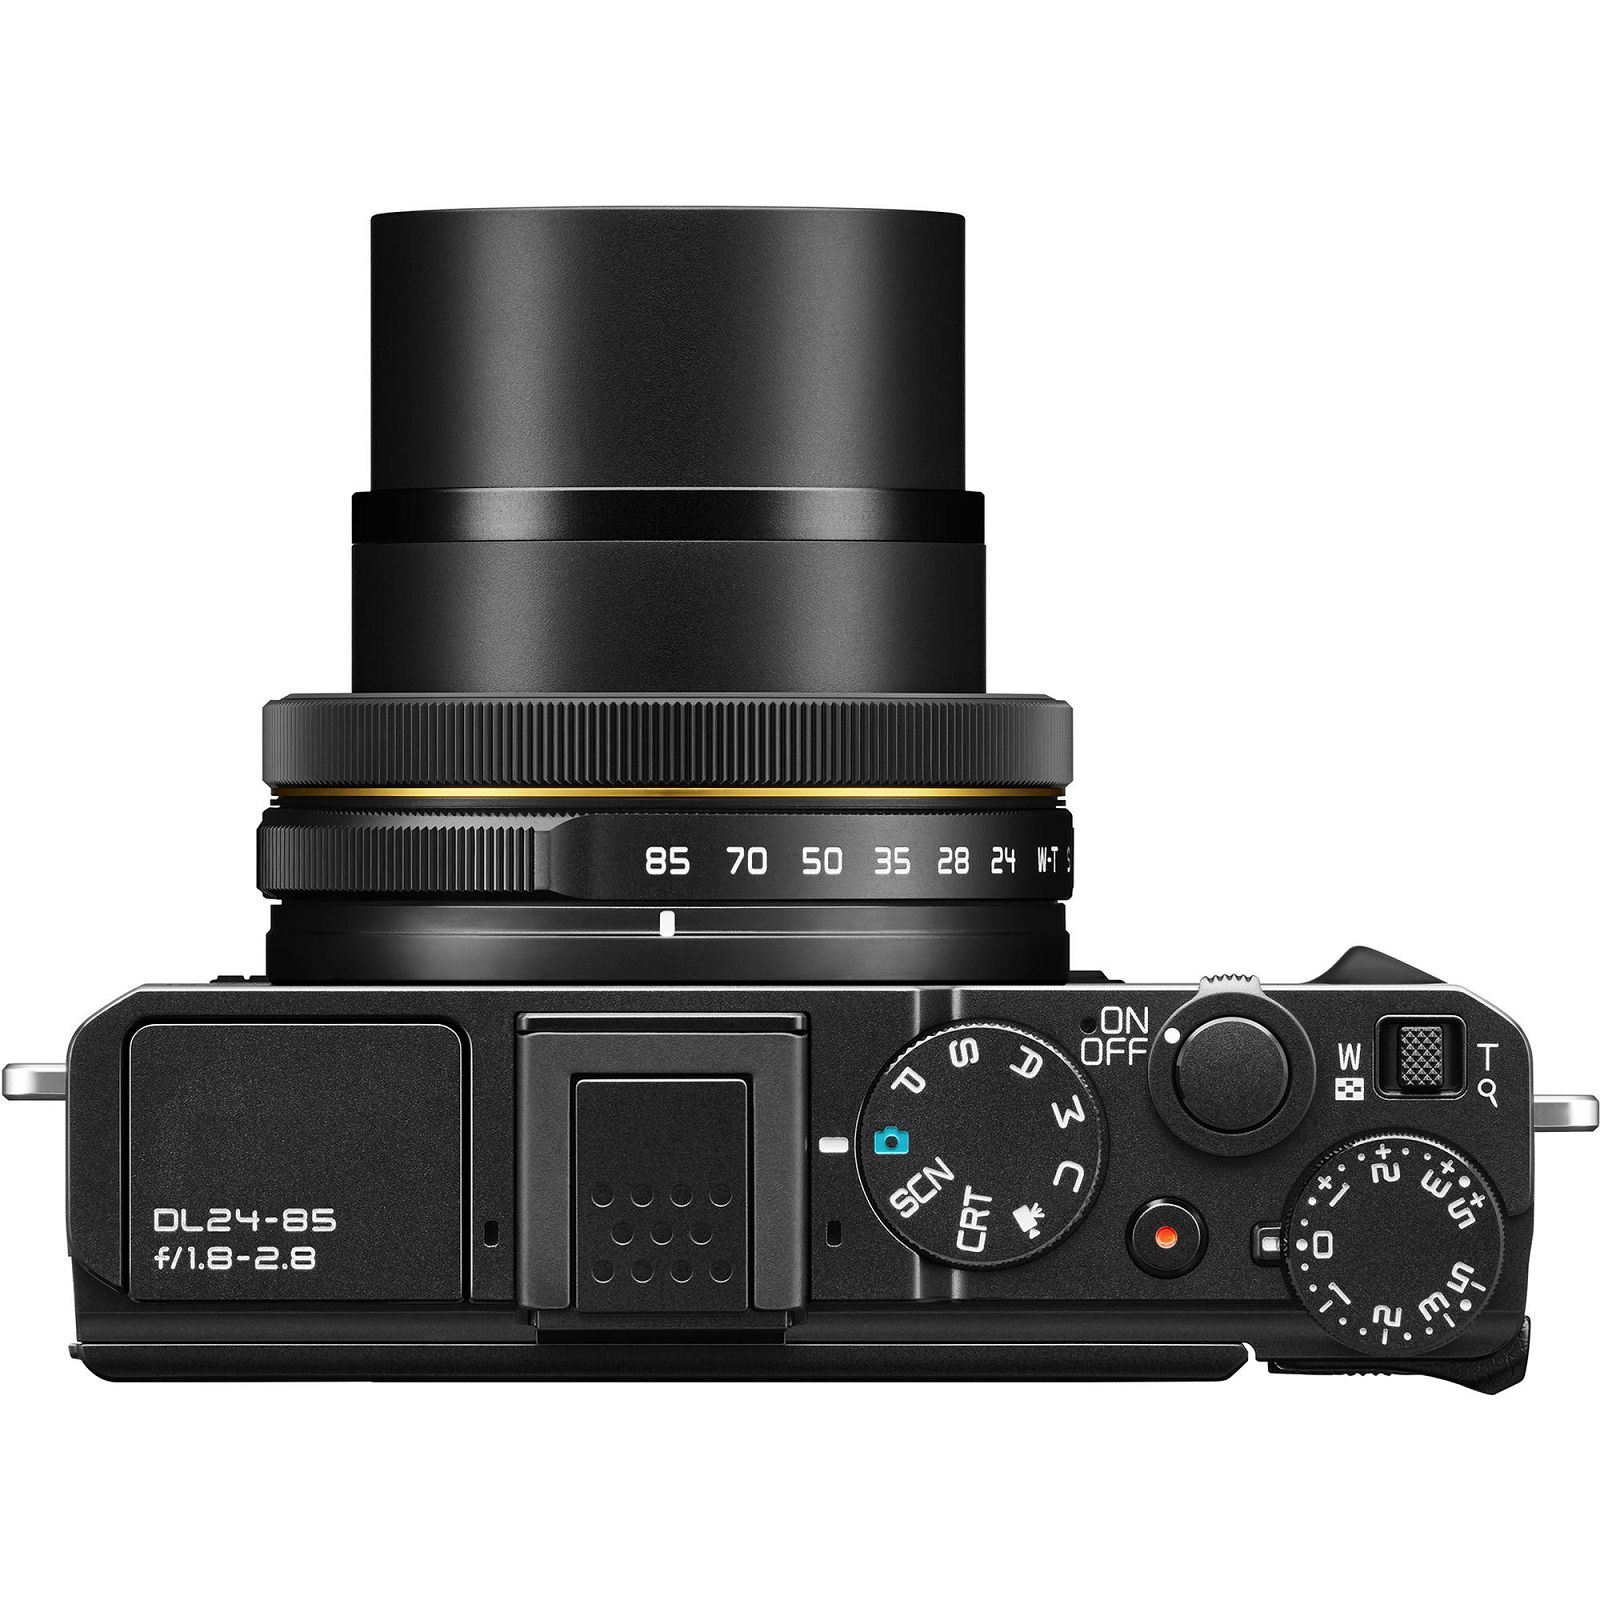 Nikon DL 24-85 f/1.8-2.8 Black Premium kompaktni digitalni fotoaparat Digital Camera VNA920E1